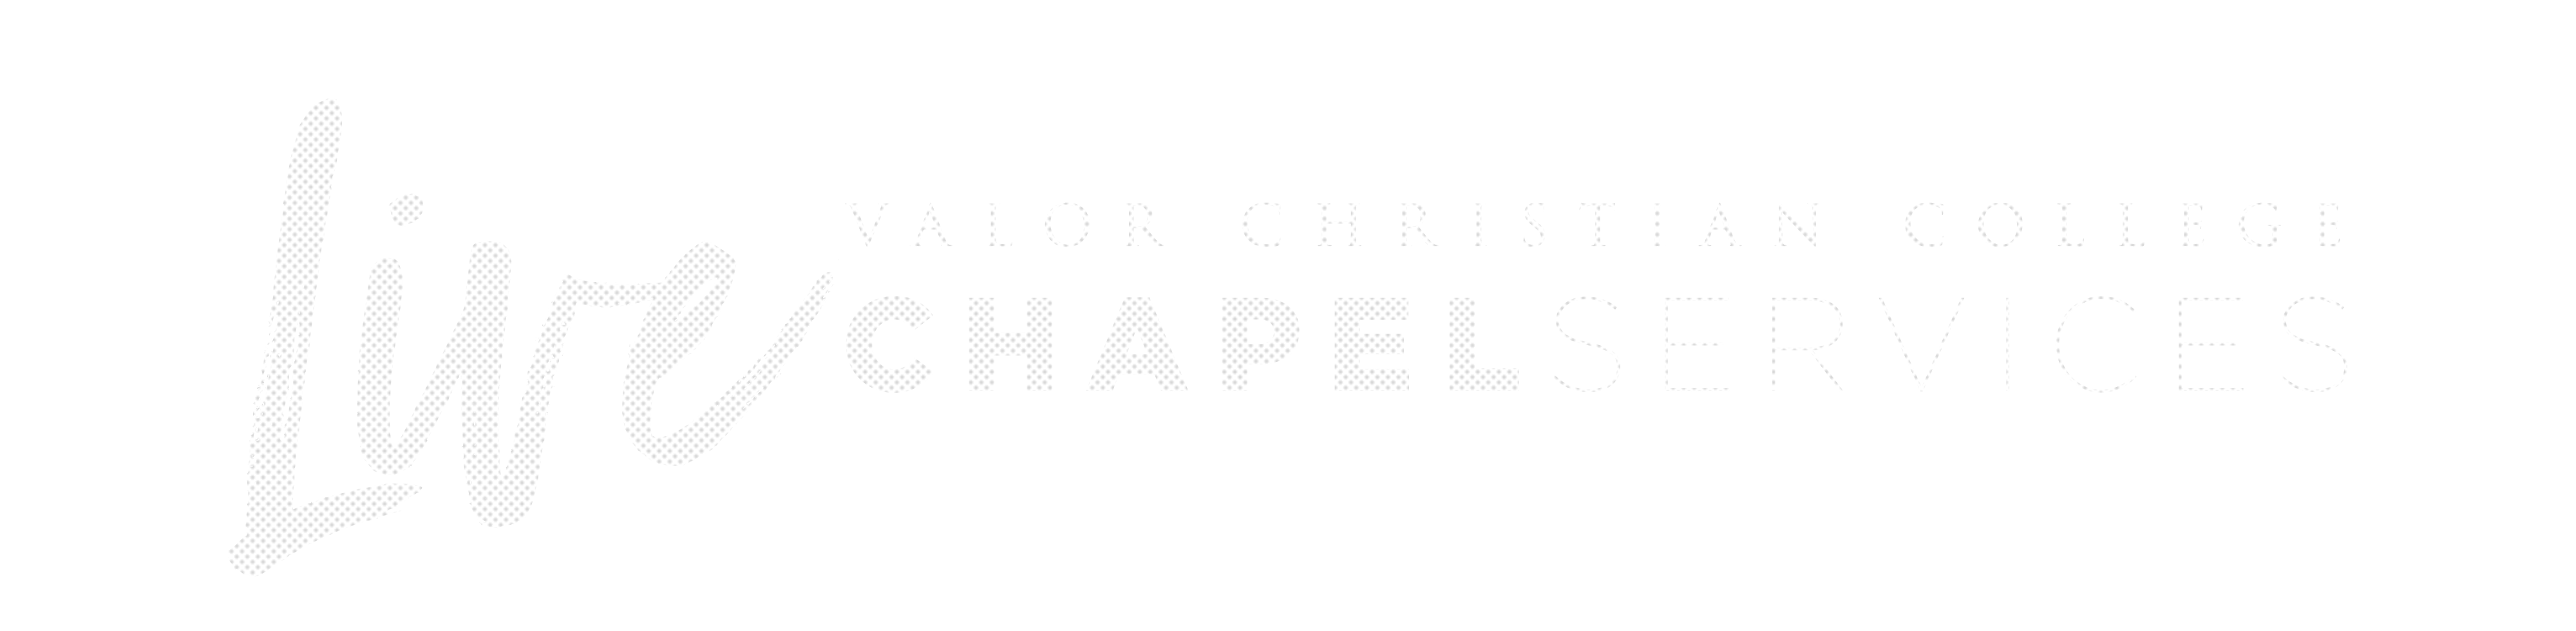 LIVE Valor Christian College Chapel Services